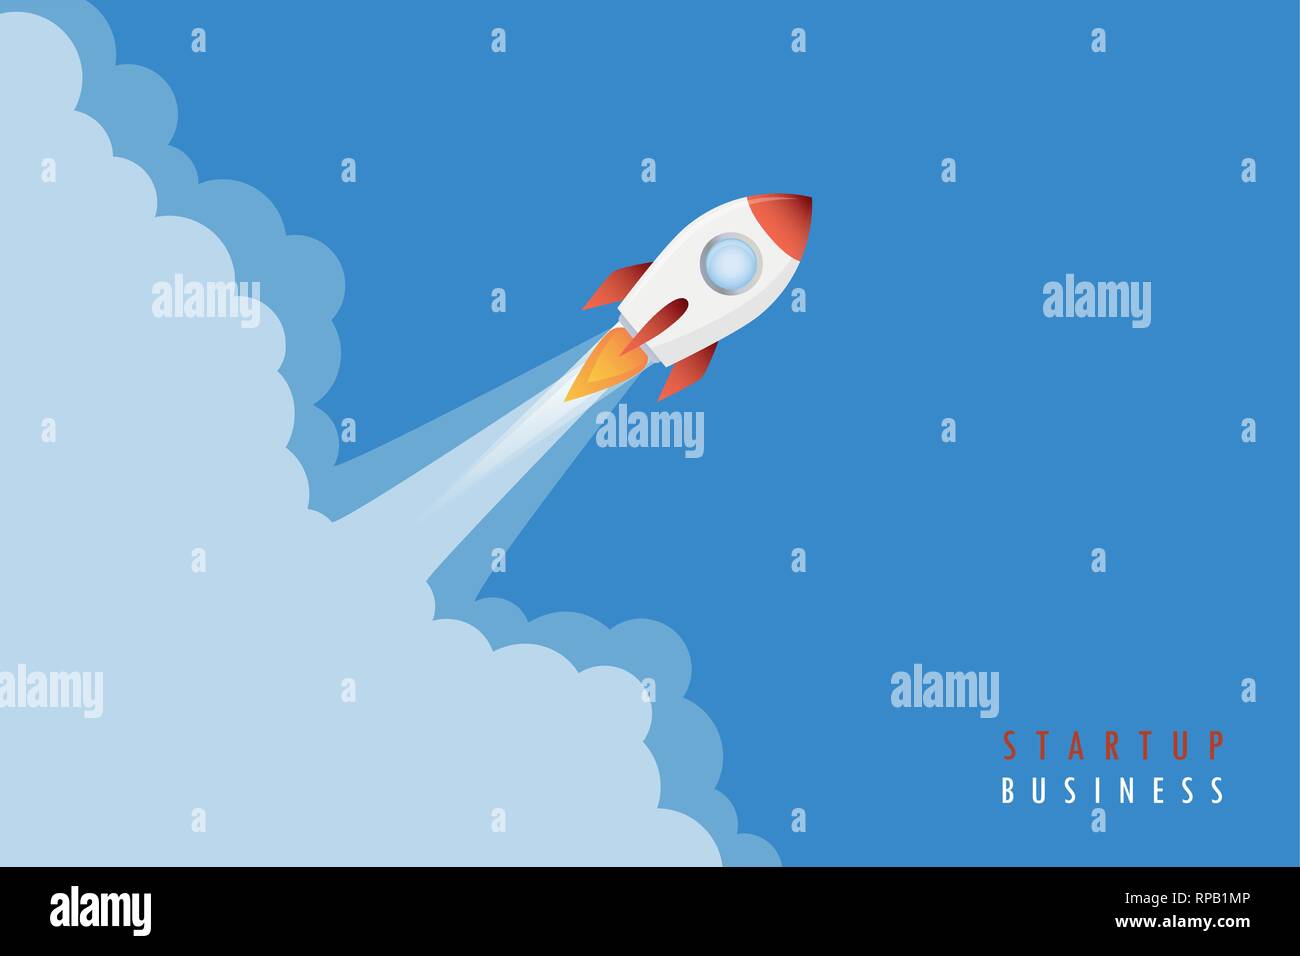 startup business concept rocket launch smoke vector illustration EPS10 Stock Vector